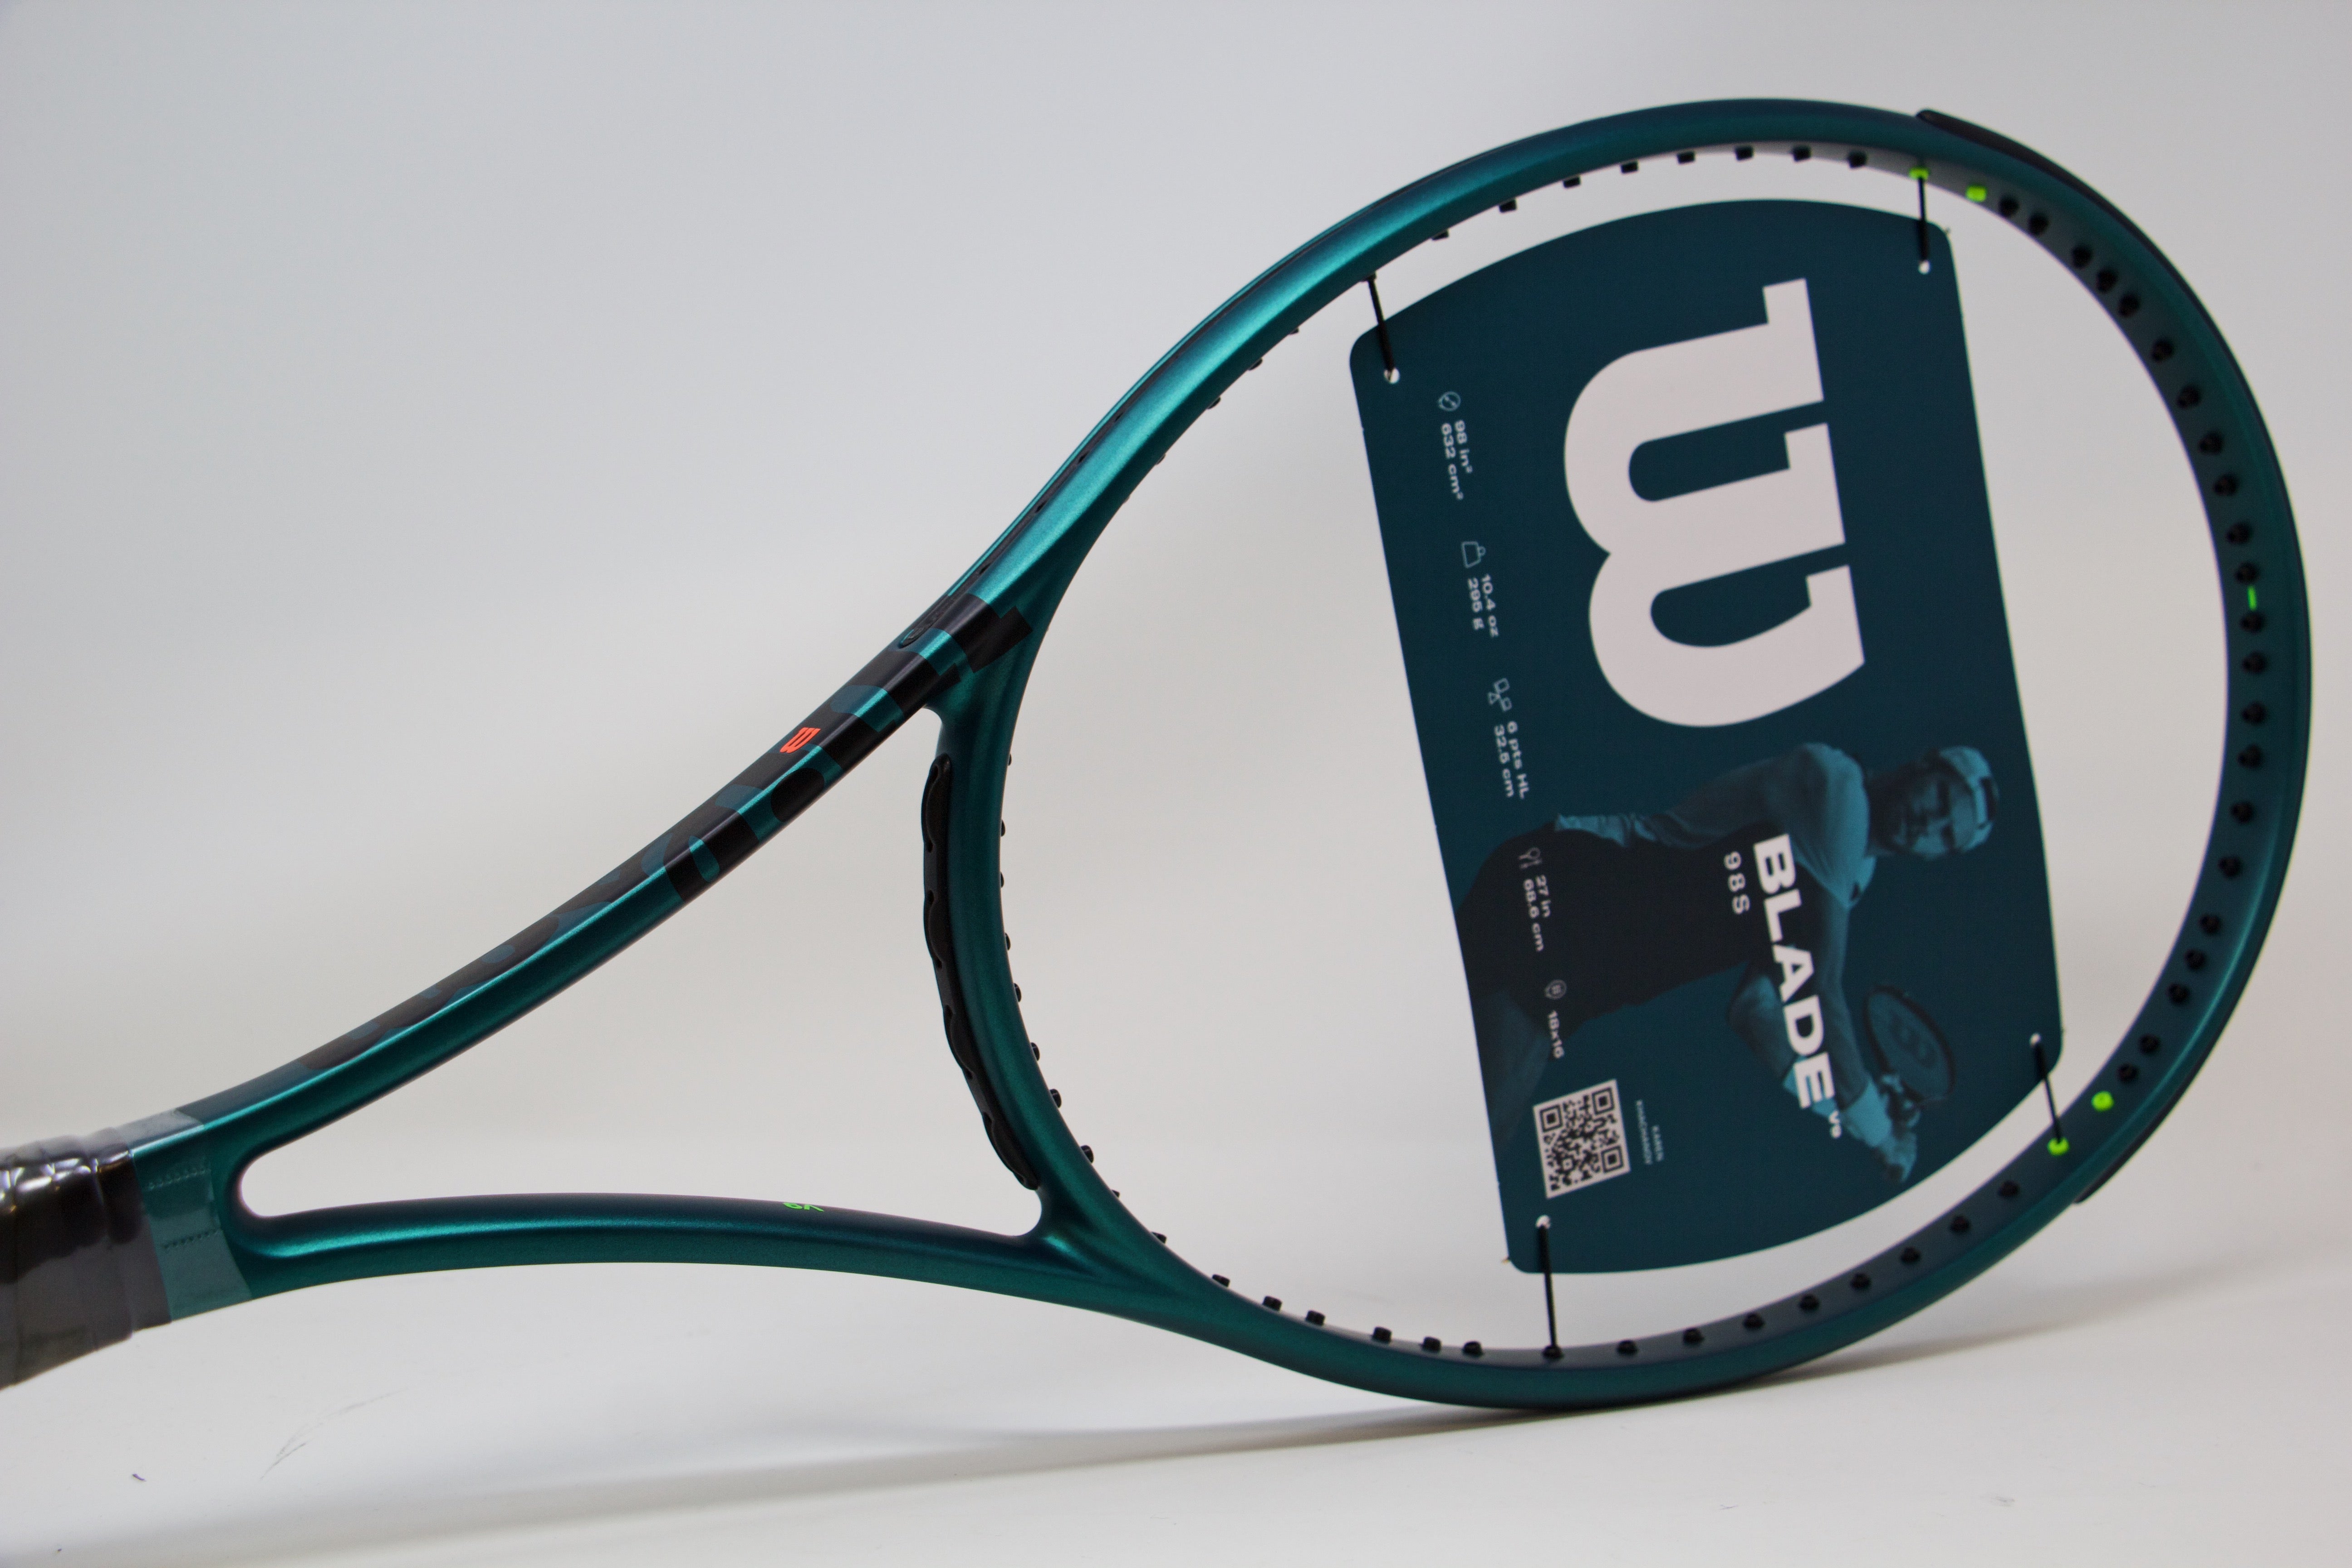 Wilson Blade 100 v9 Tennis Racket